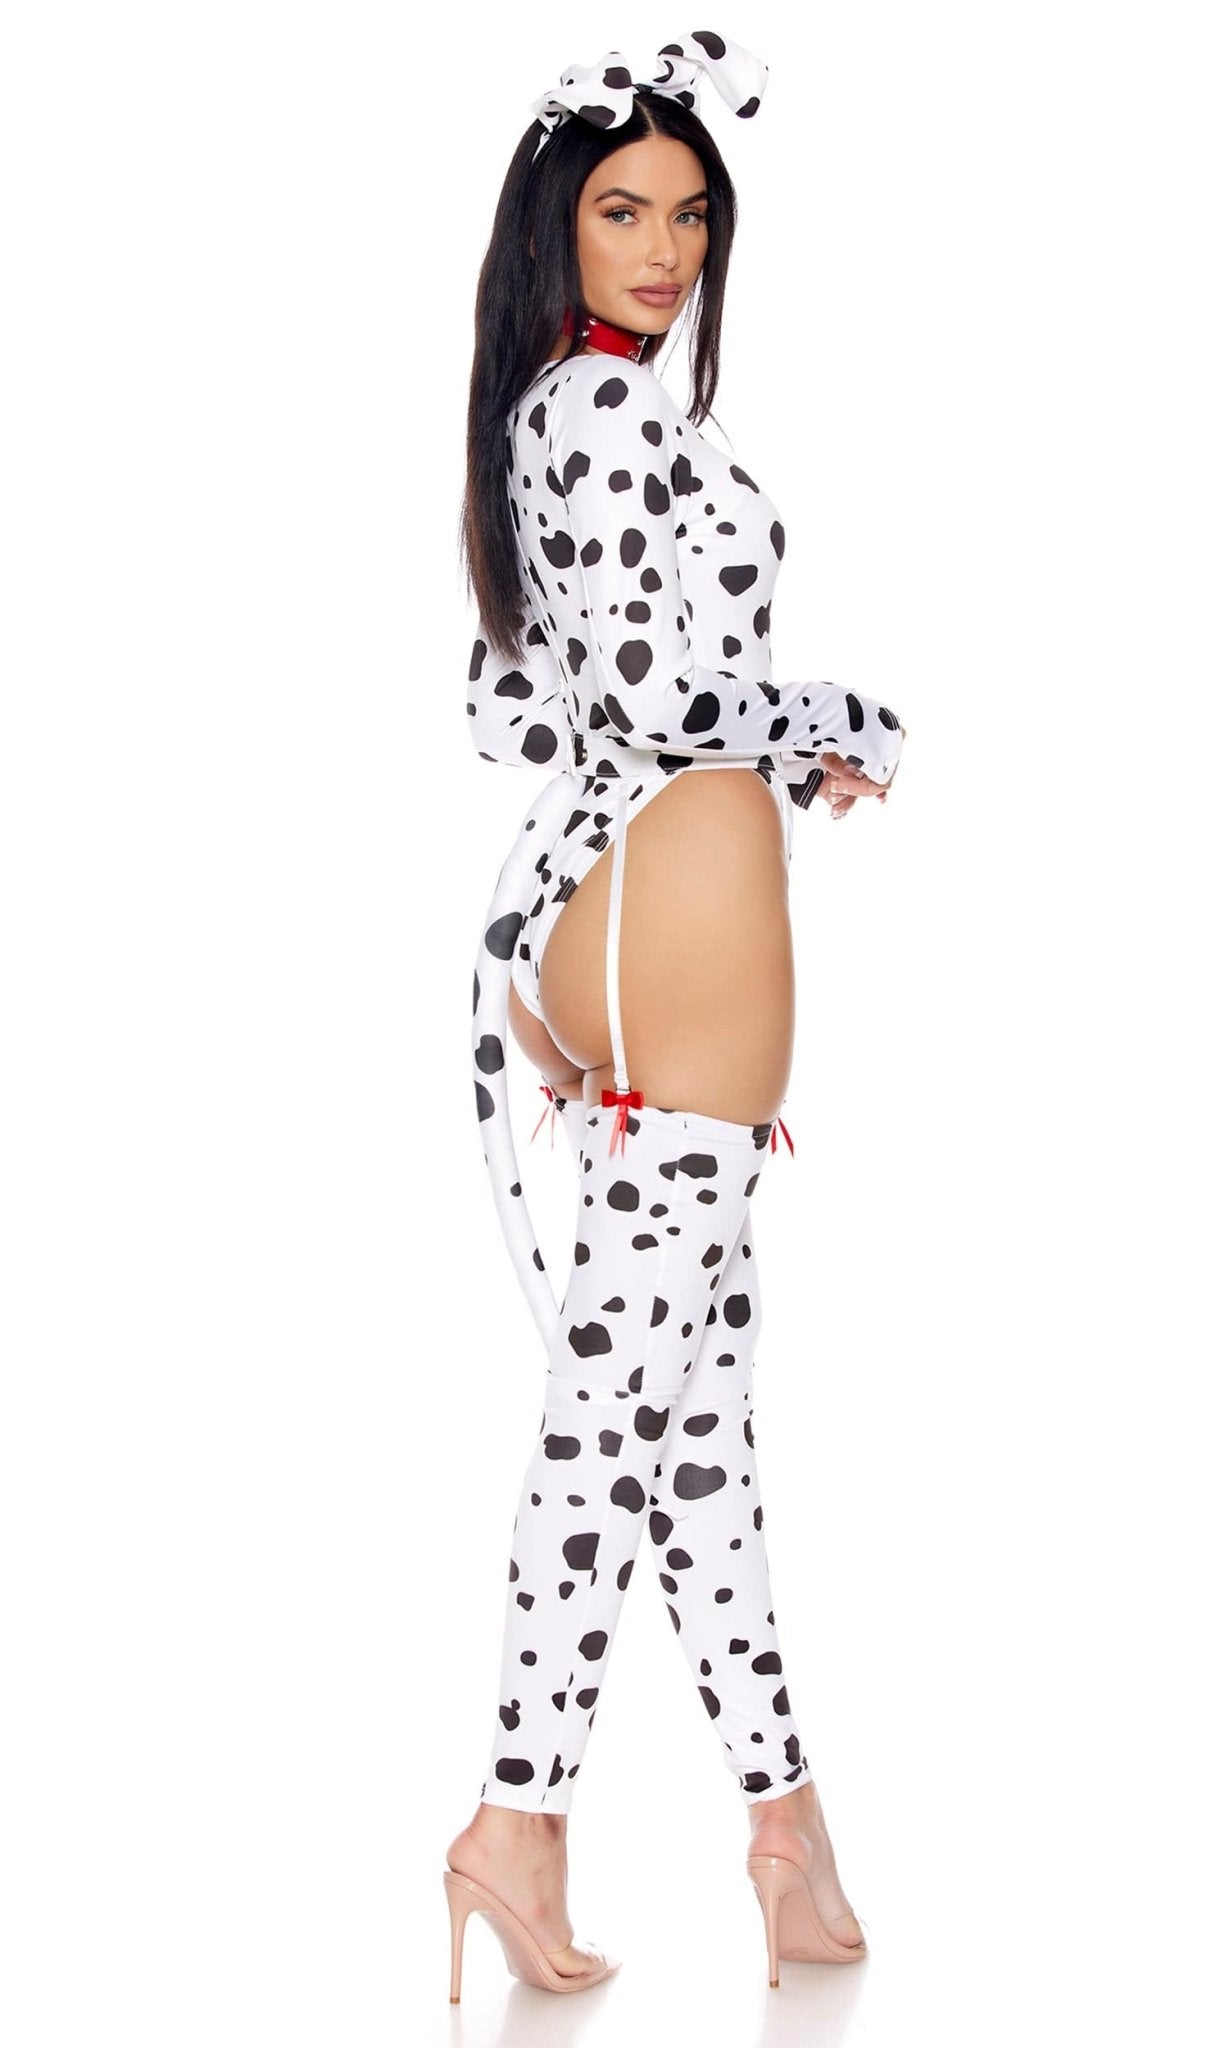 Sexy Dotty Dalmatian Halloween Costume Musotica.com